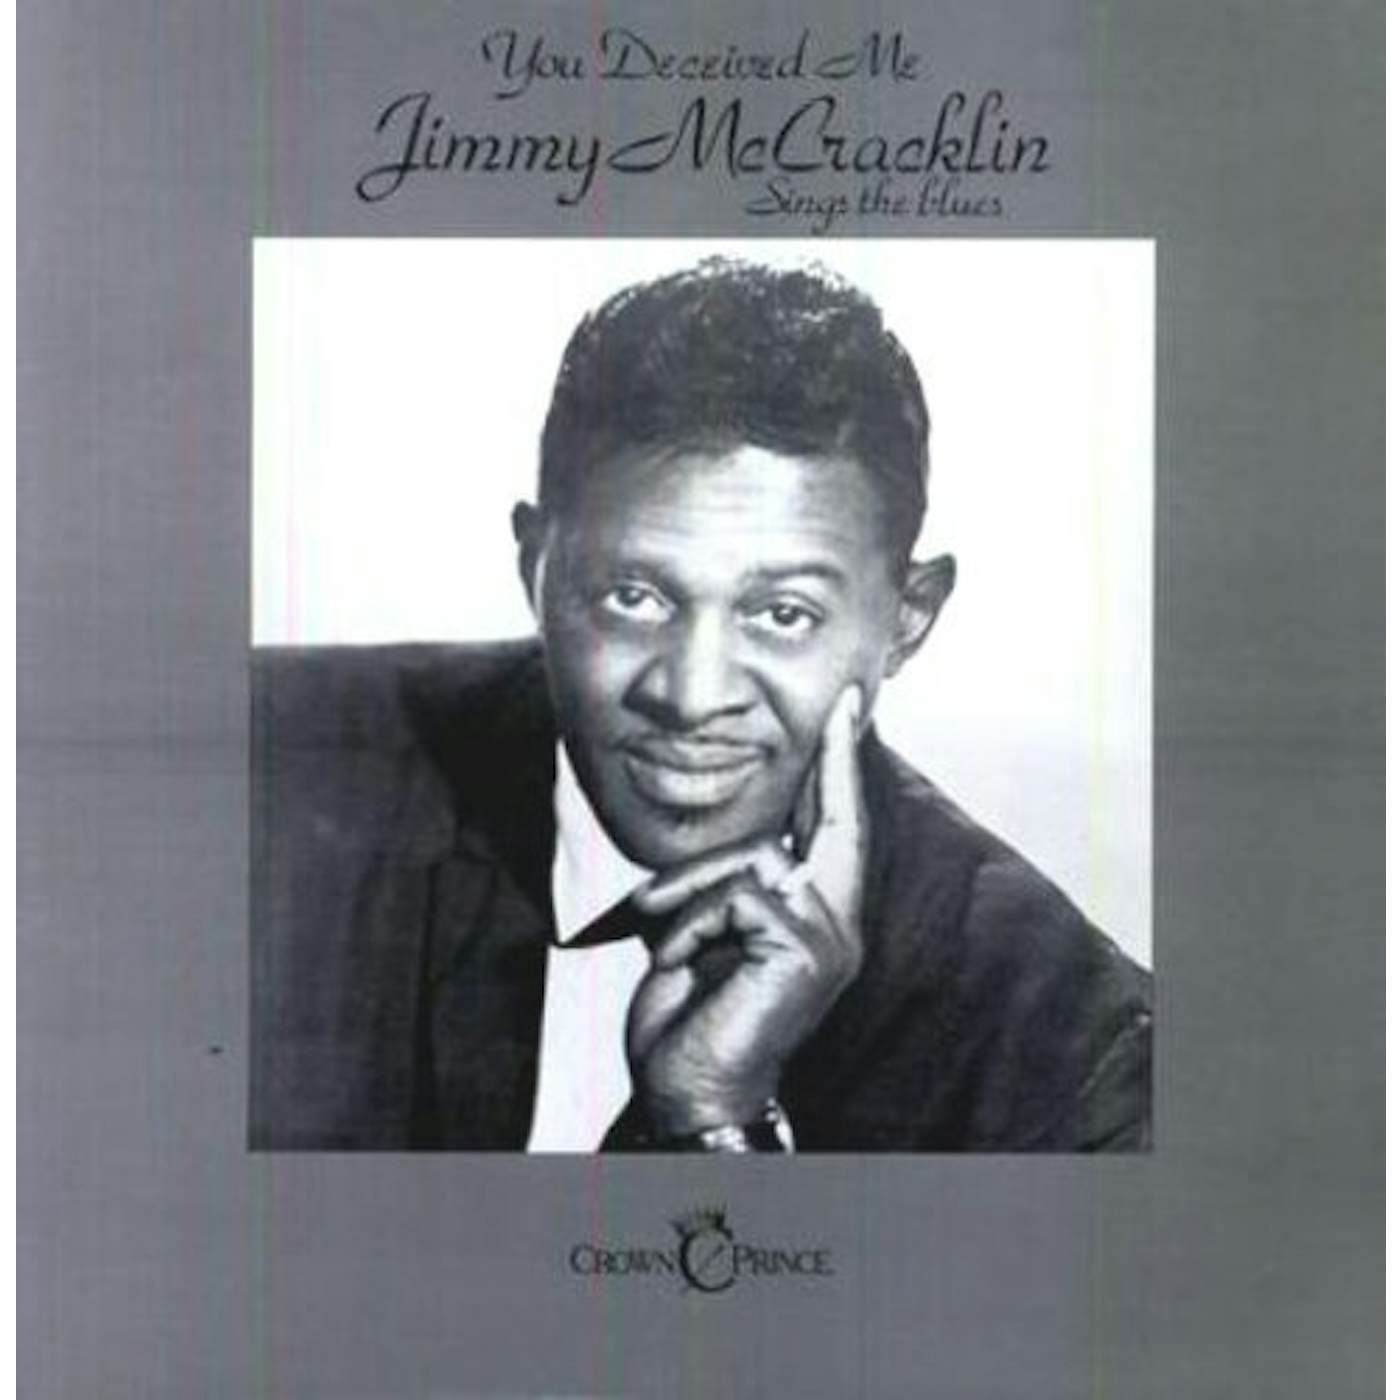 Jimmy McCracklin You Deceived Me Vinyl Record